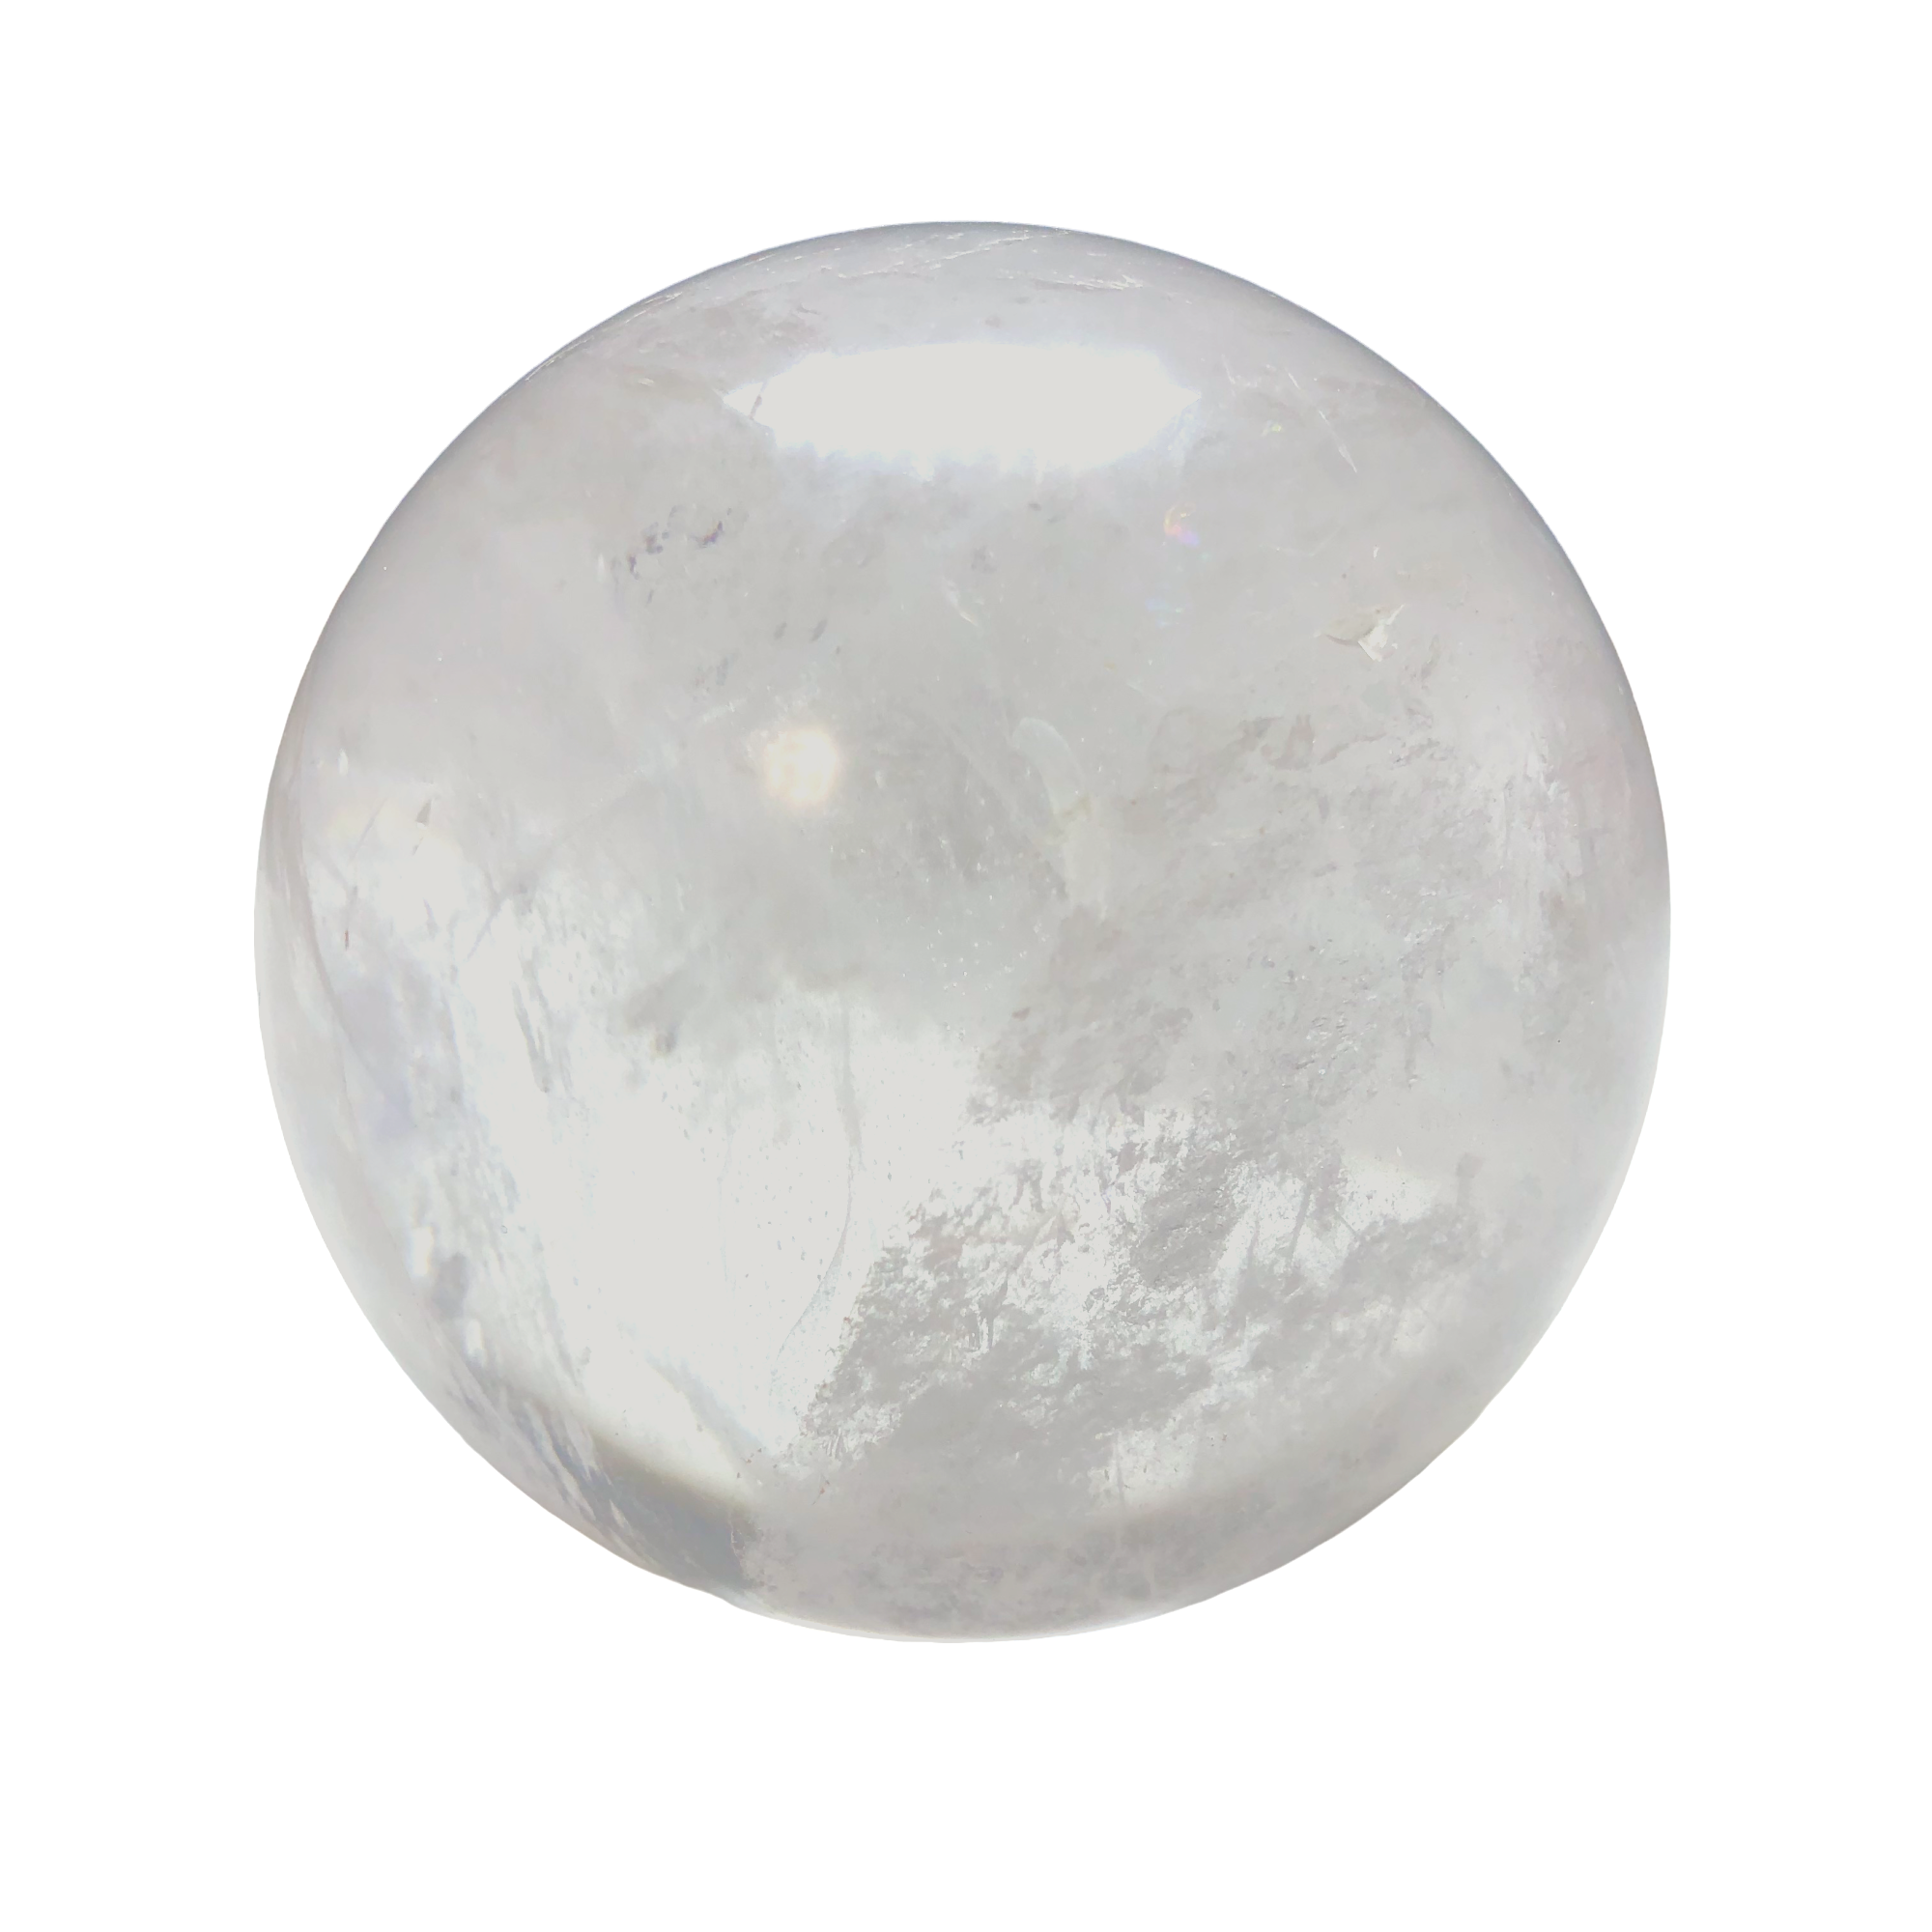 Clear Quartz Sphere $450